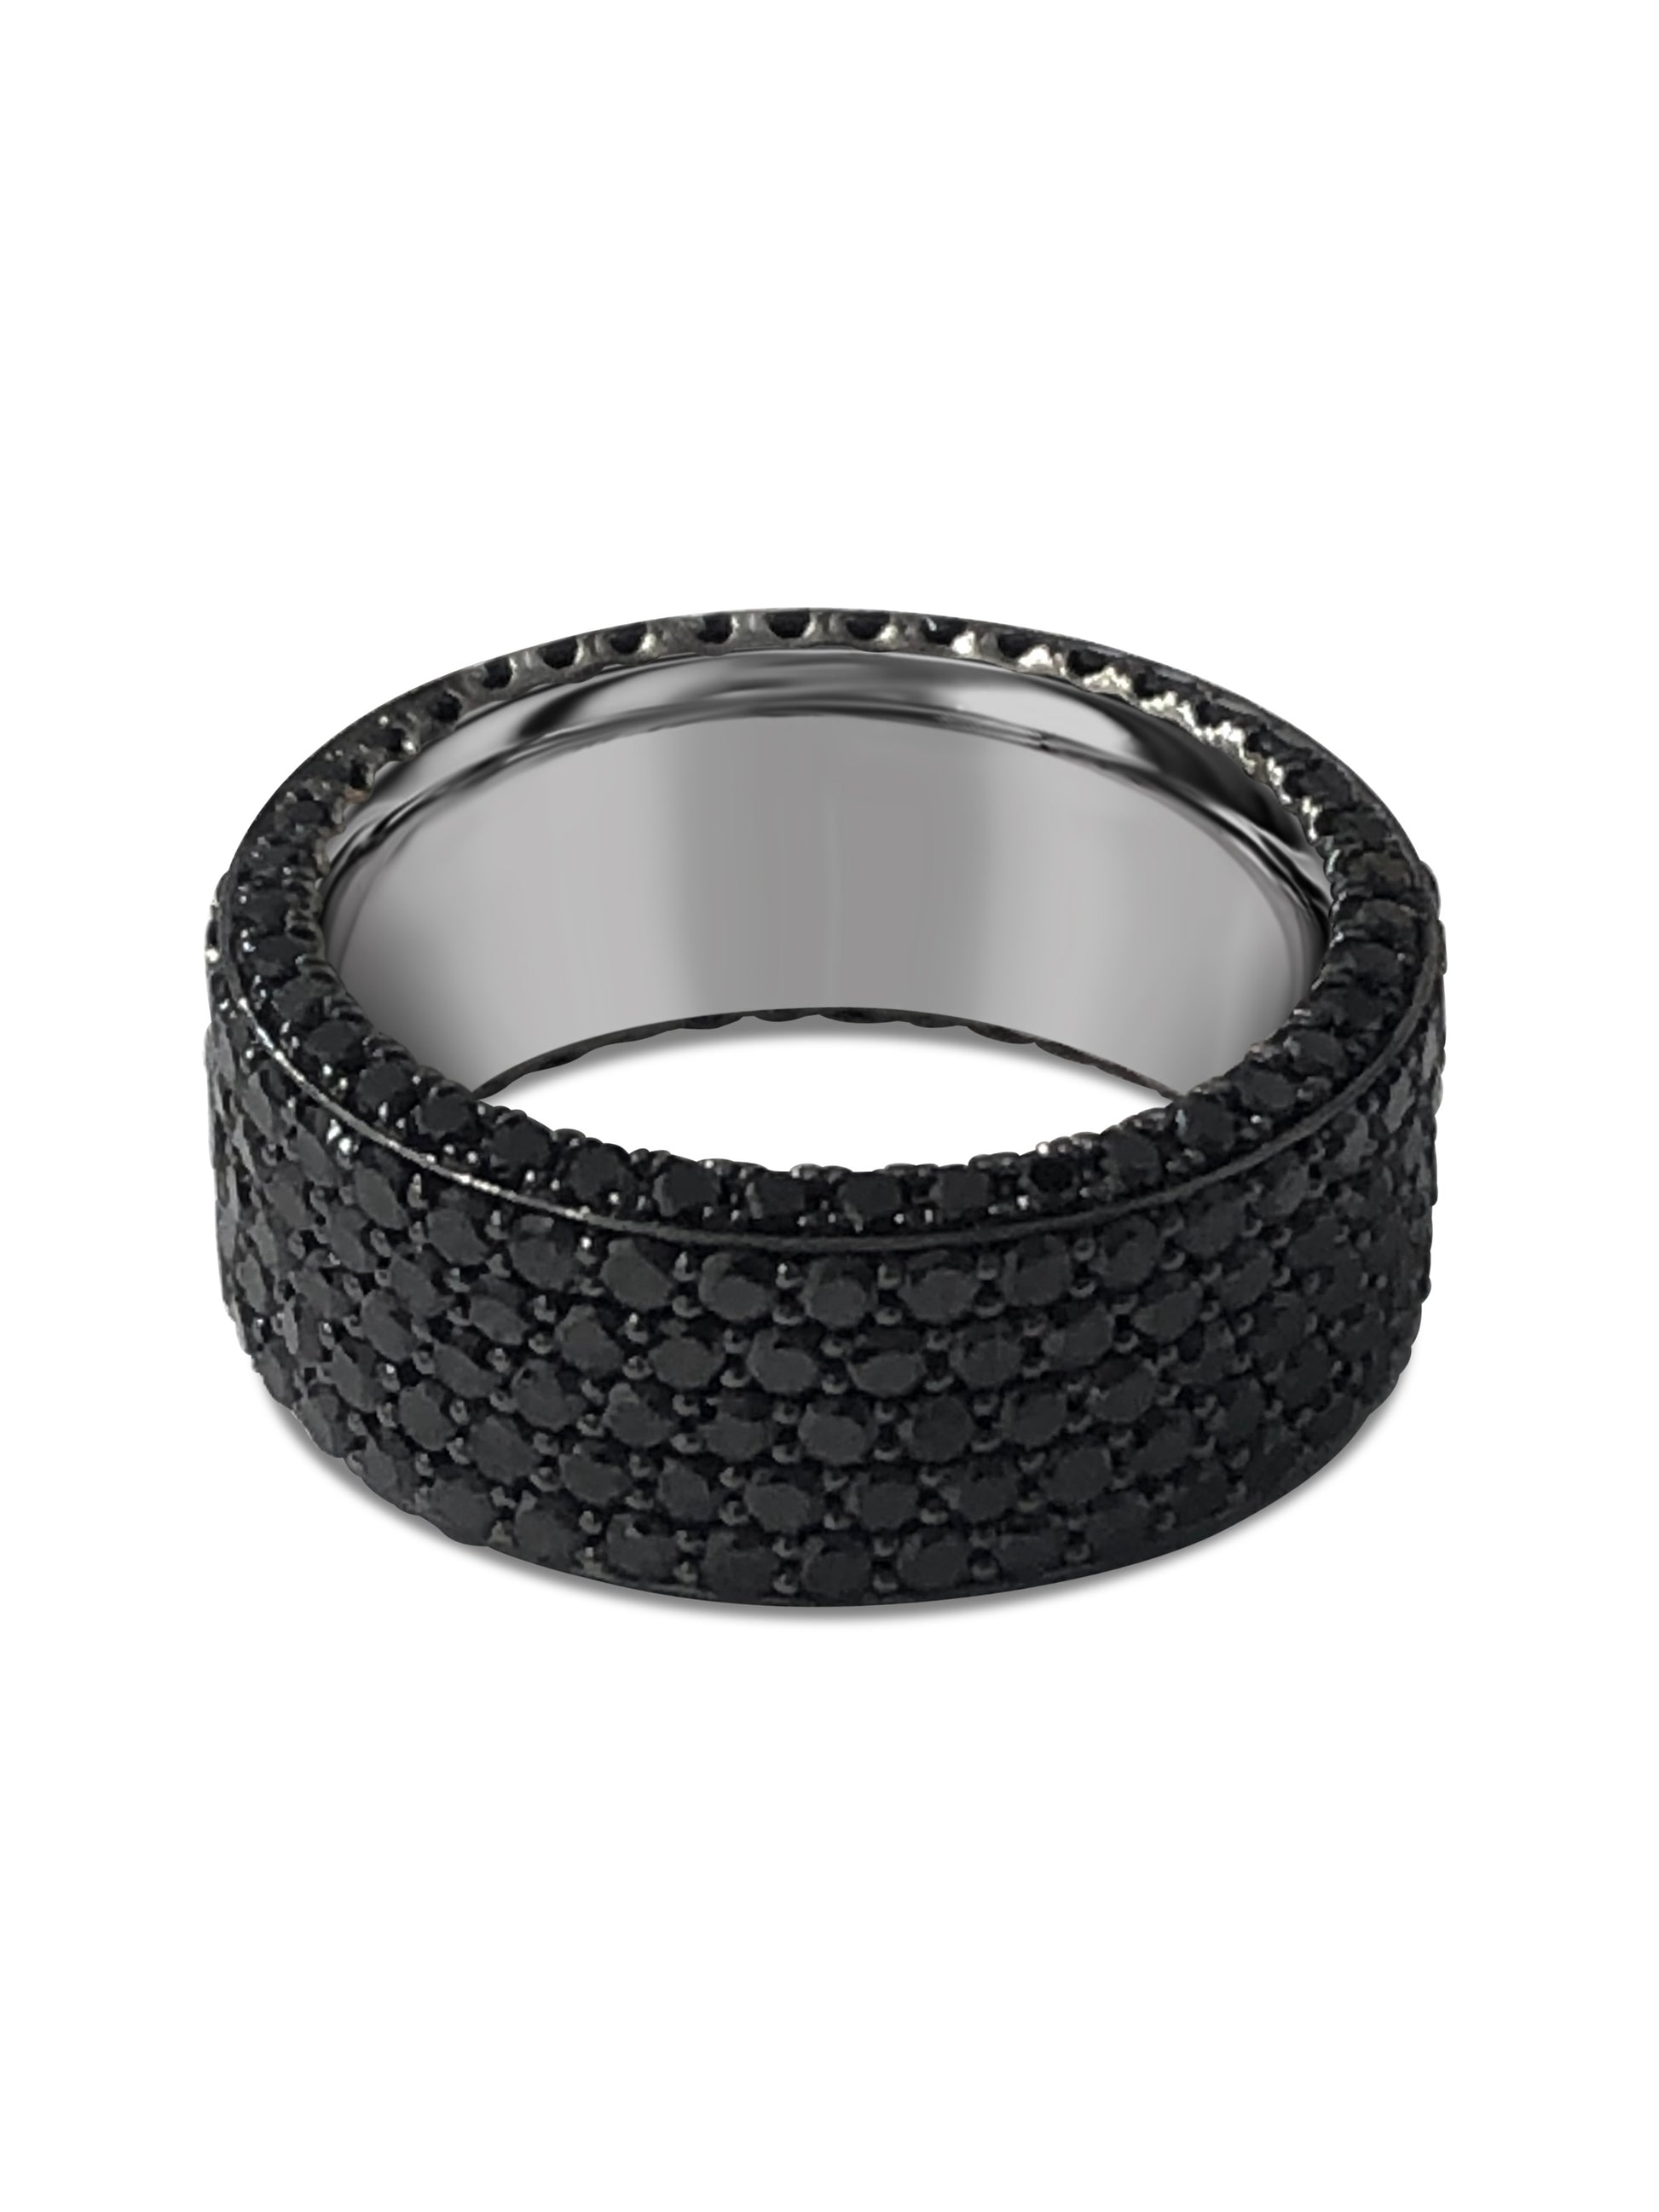 michael's custom jewelers design 6597 black diamond band 14k grey gold